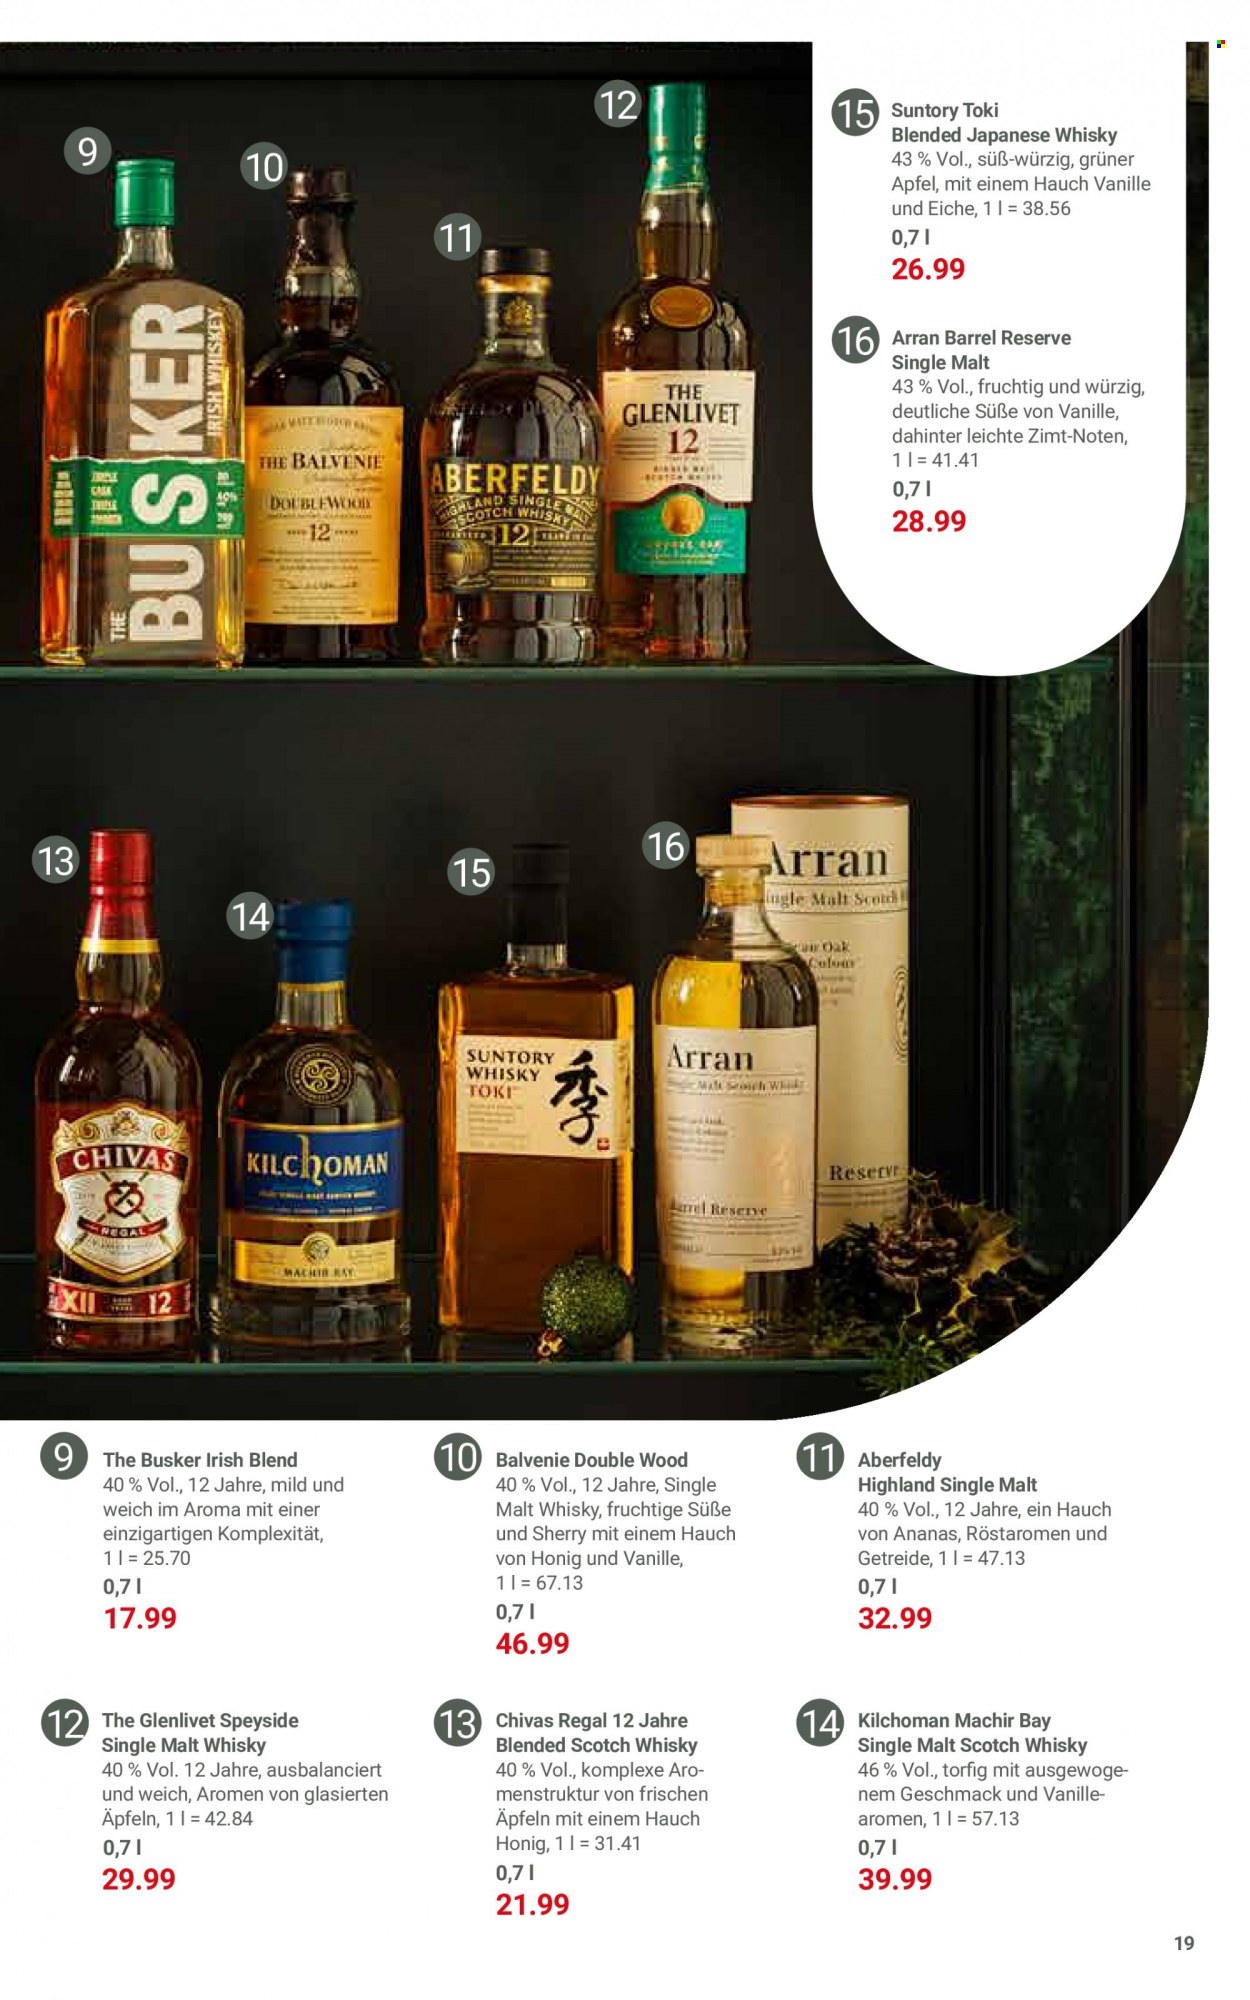 thumbnail - Prospekte Globus - 28.11.2022 - 24.12.2022 - Produkte in Aktion - Alkohol, Äpfel, Blended Scotch Whisky, Whiskey, Single Malt, Scotch Whisky, Irish Whiskey, Chivas Regal. Seite 19.